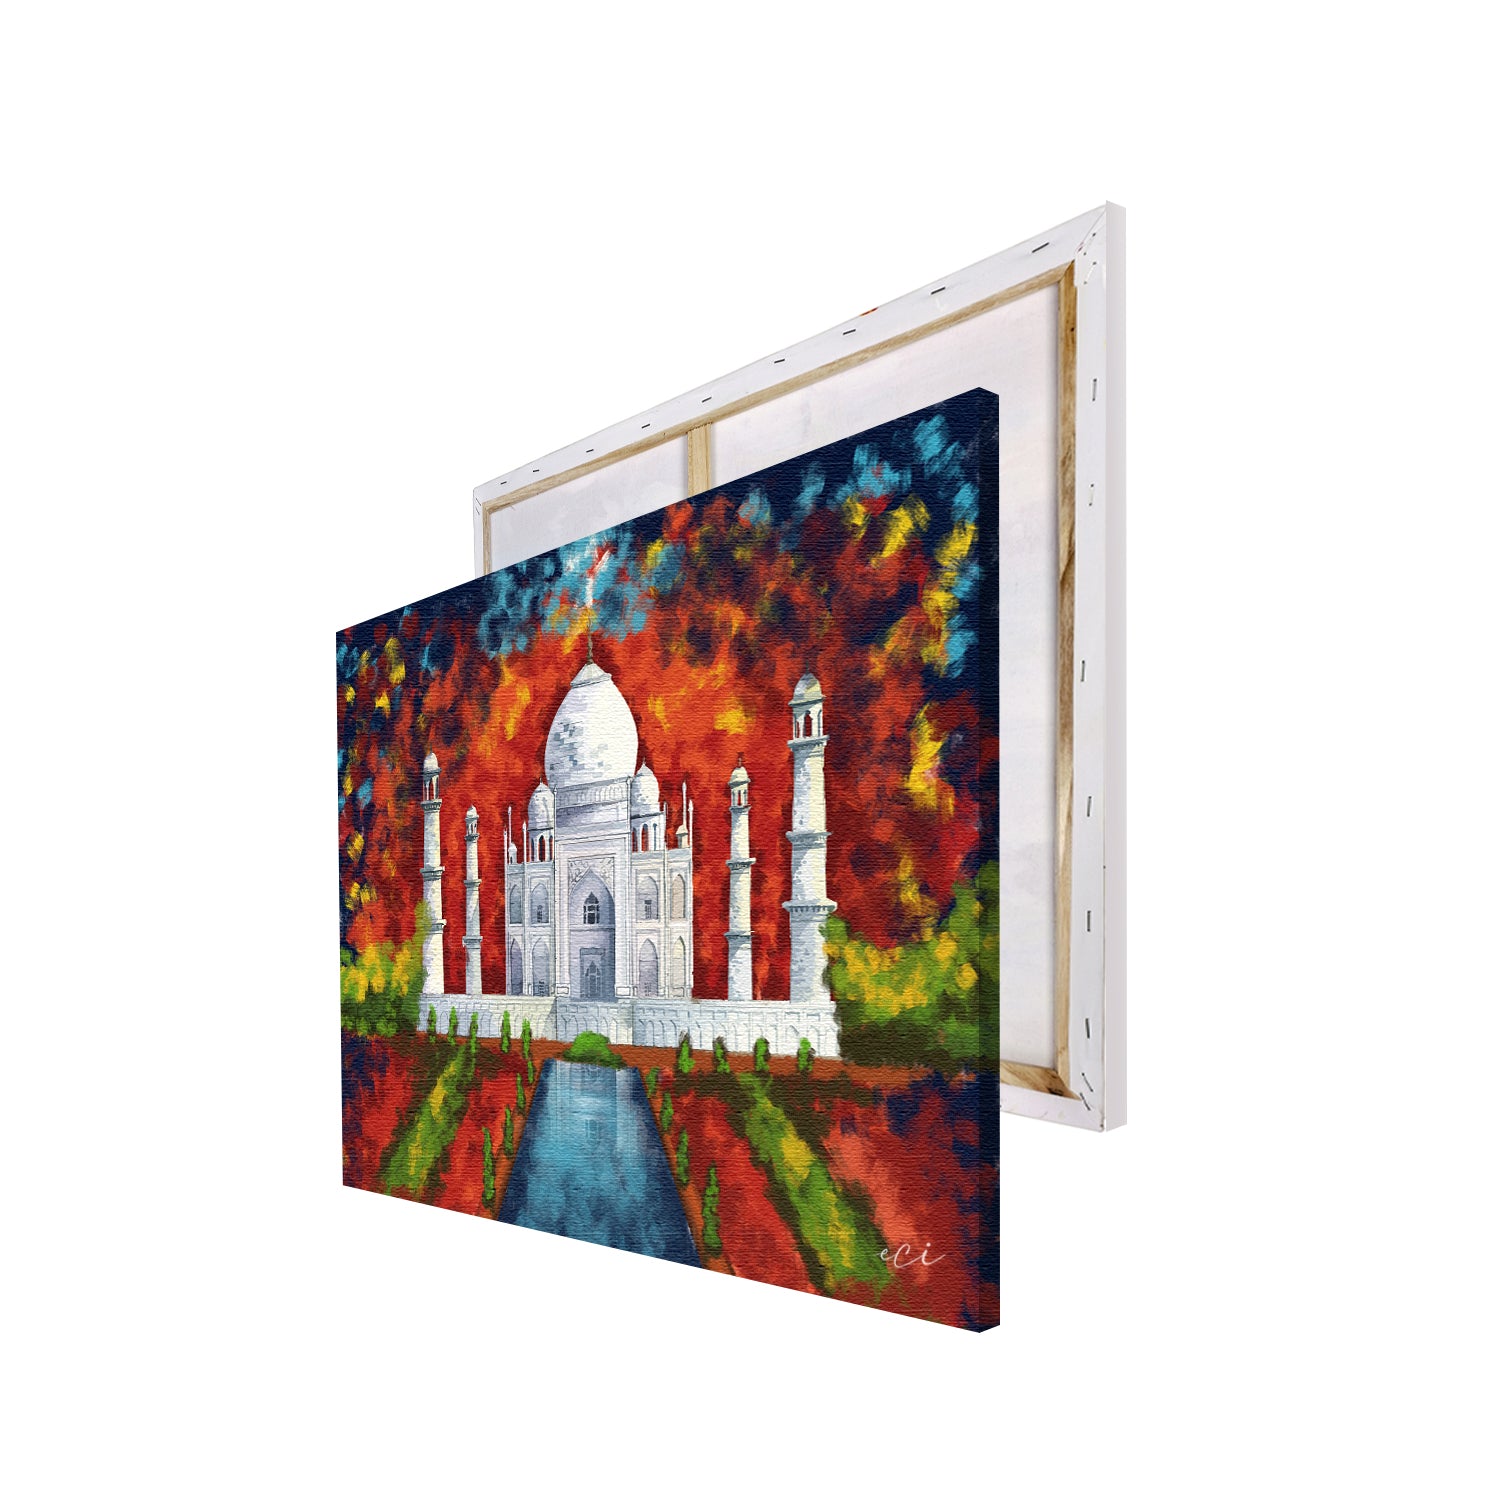 Taj Mahal Scenery Original Design Canvas Printed Wall Painting 4